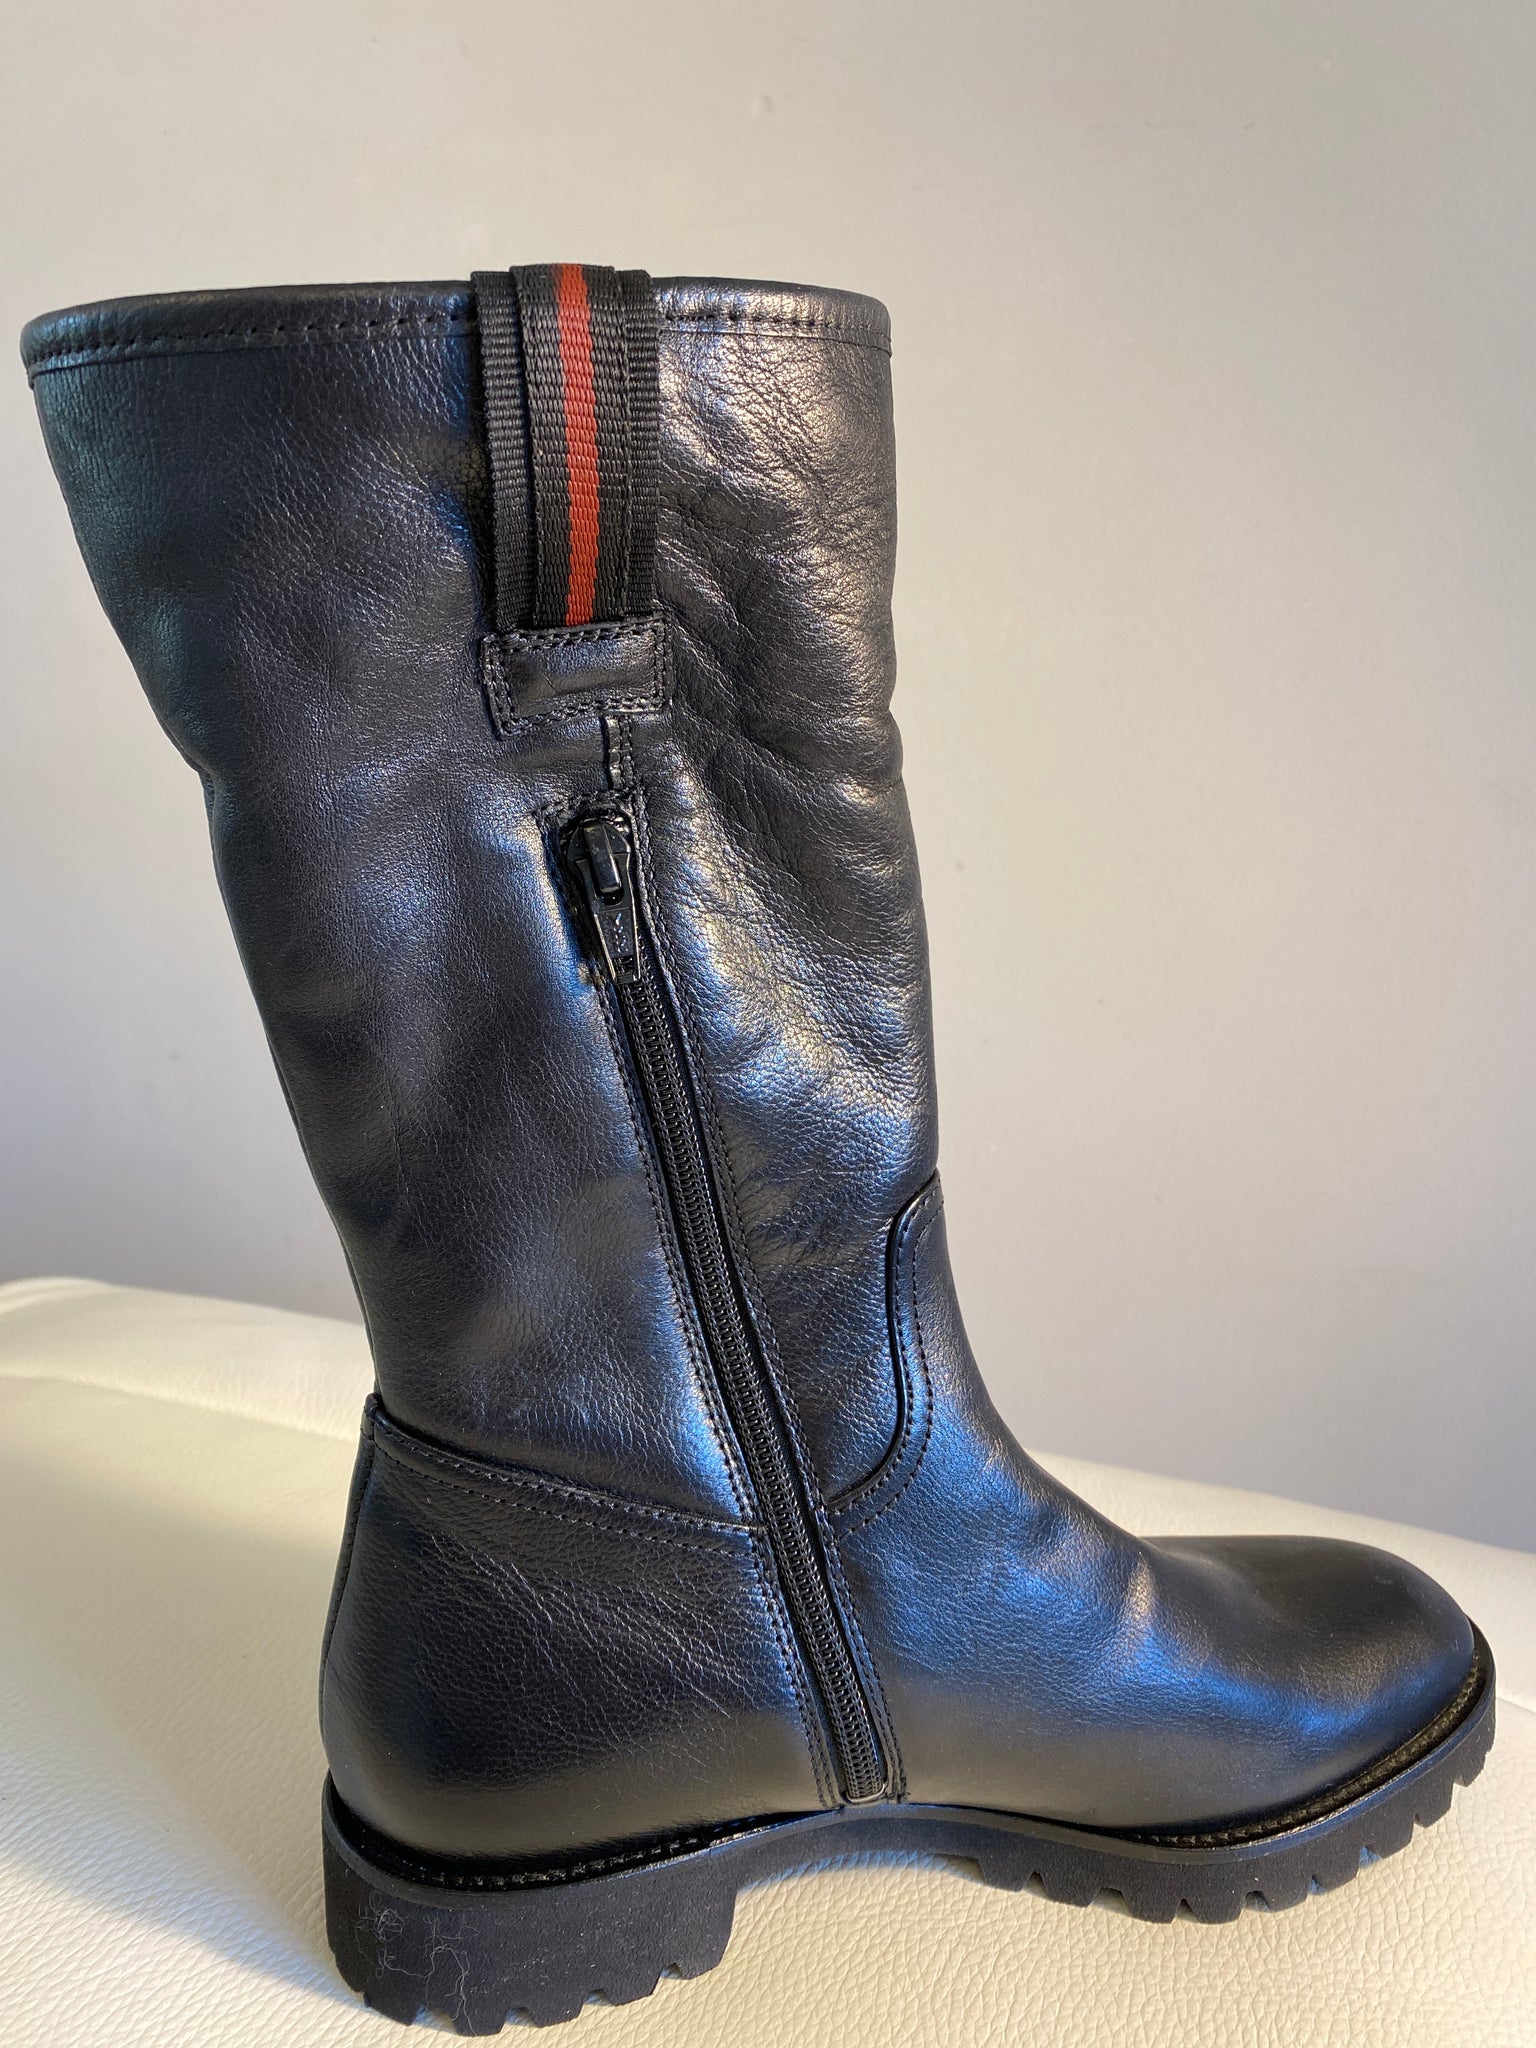 Hogl black leather boot